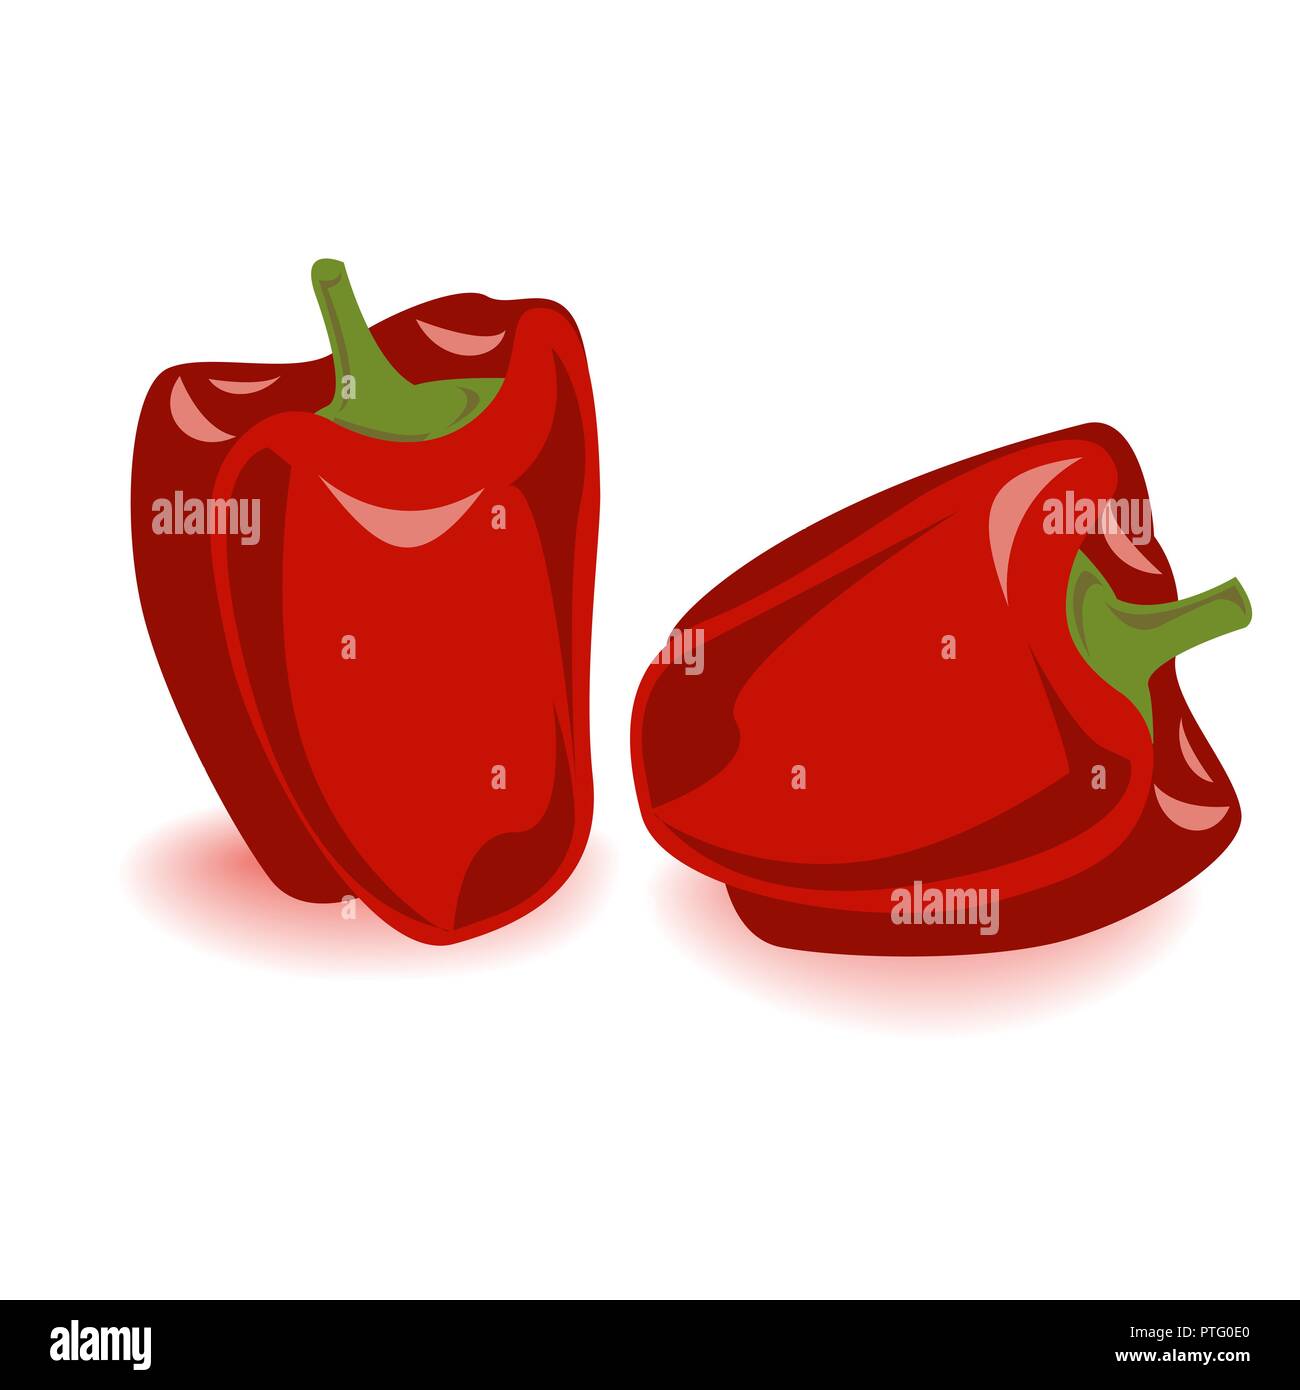 2 peperone rosso verdure set. Illustrazione Vettoriale, cartoon e gustosi capsium, isolato su bianco. Illustrazione Vettoriale